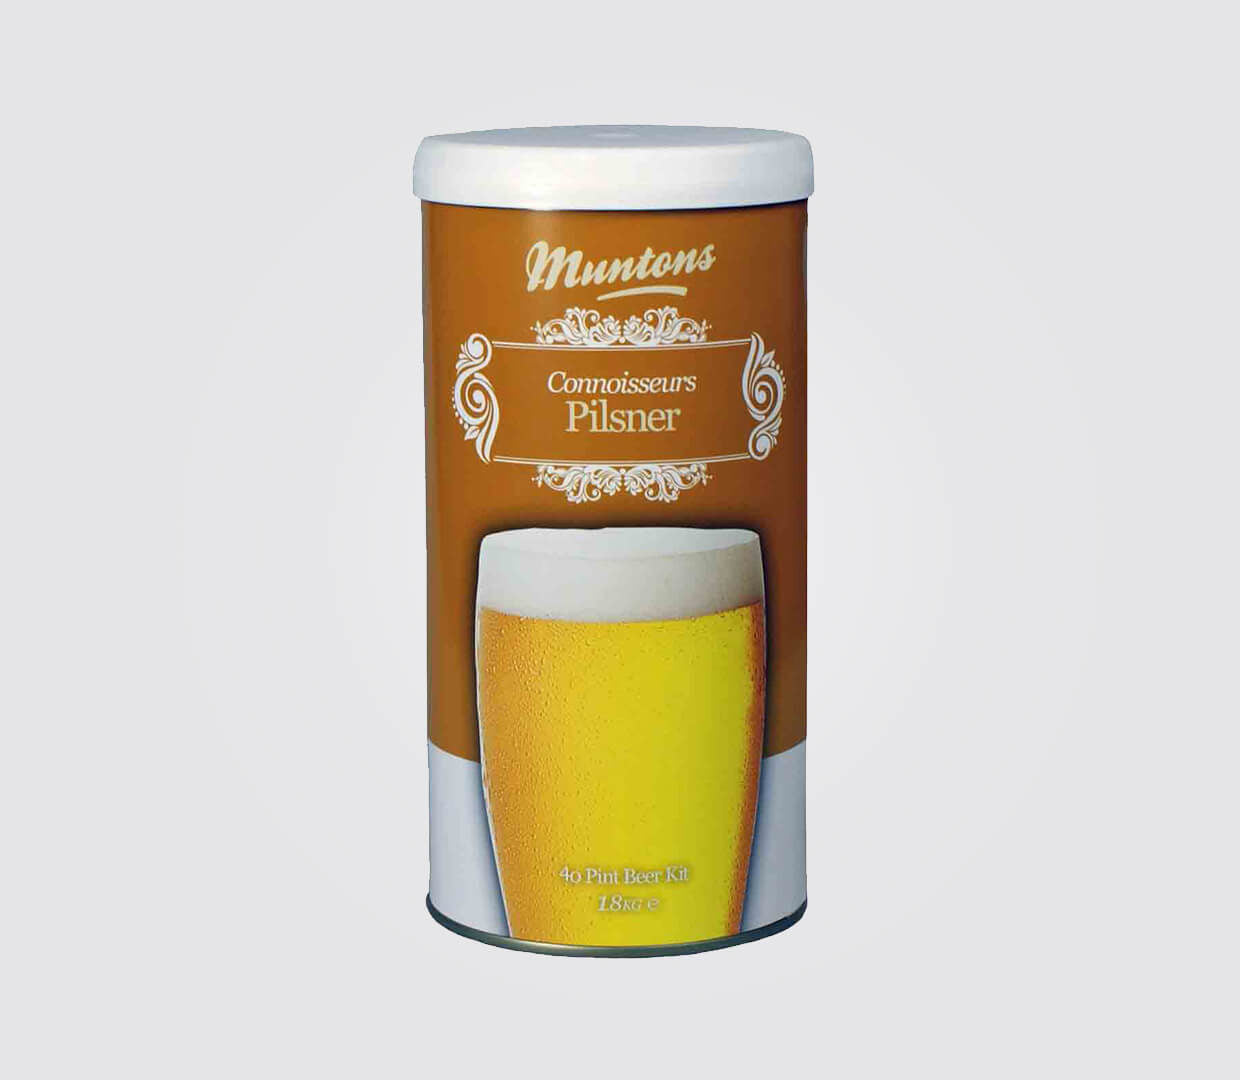 Muntons Connoisseurs Range Pilsner 1.8kg - All Things Fermented | Home Brew Shop NZ | Supplies | Equipment